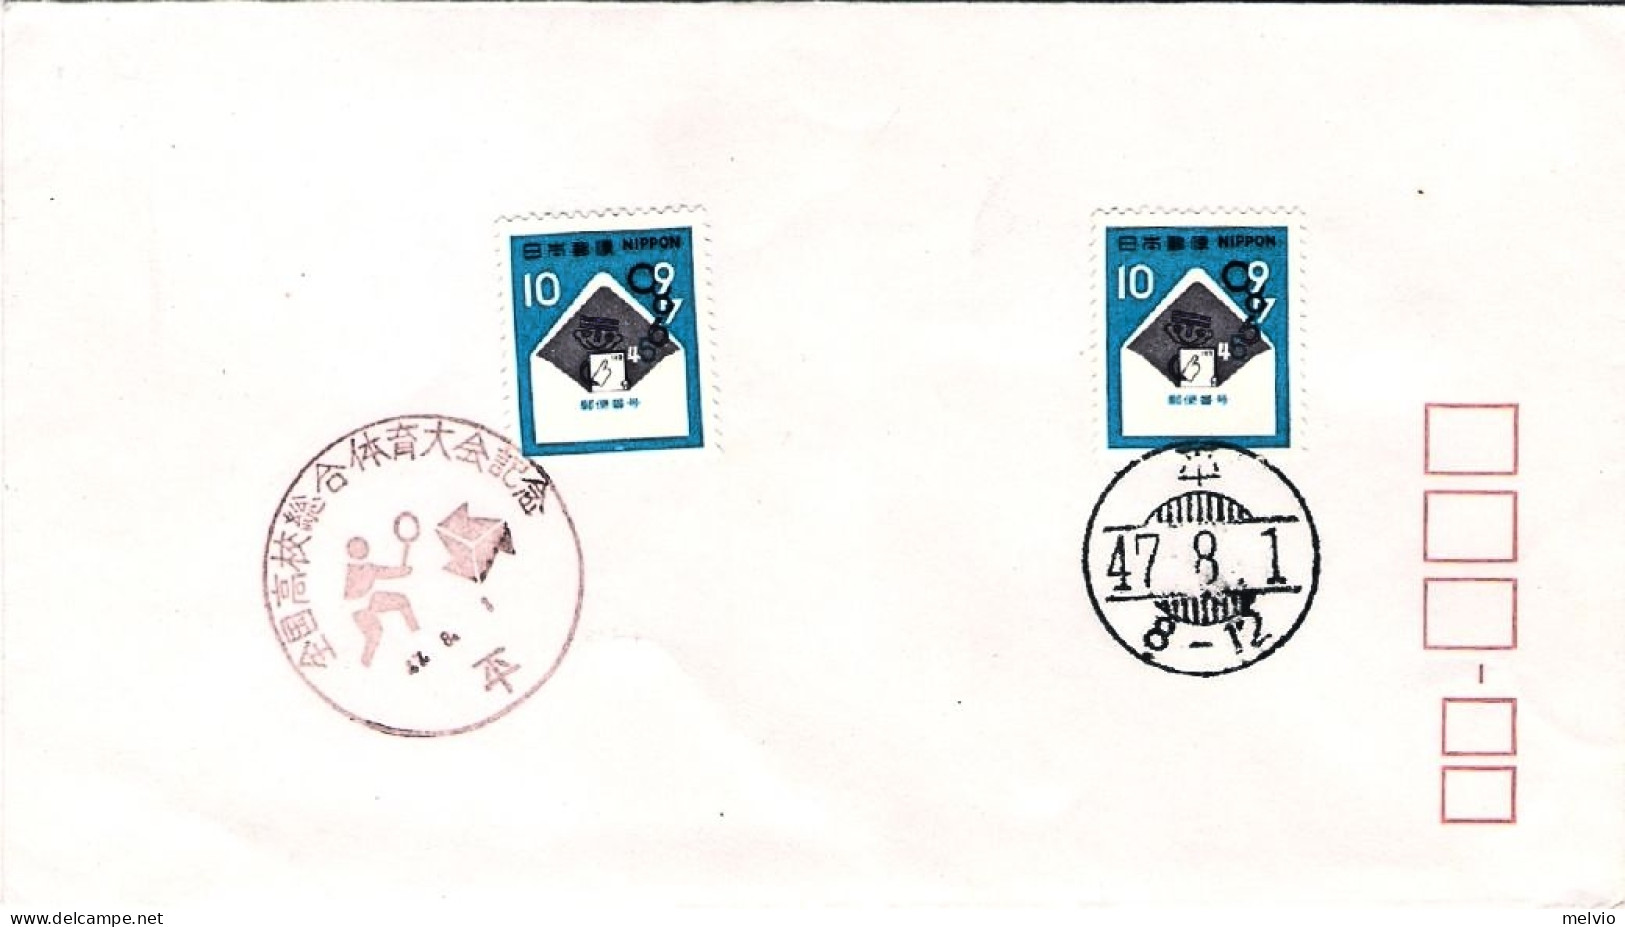 1972-Giappone Japan Due 10y."Codice Avviamento Postale"su Fdc - FDC